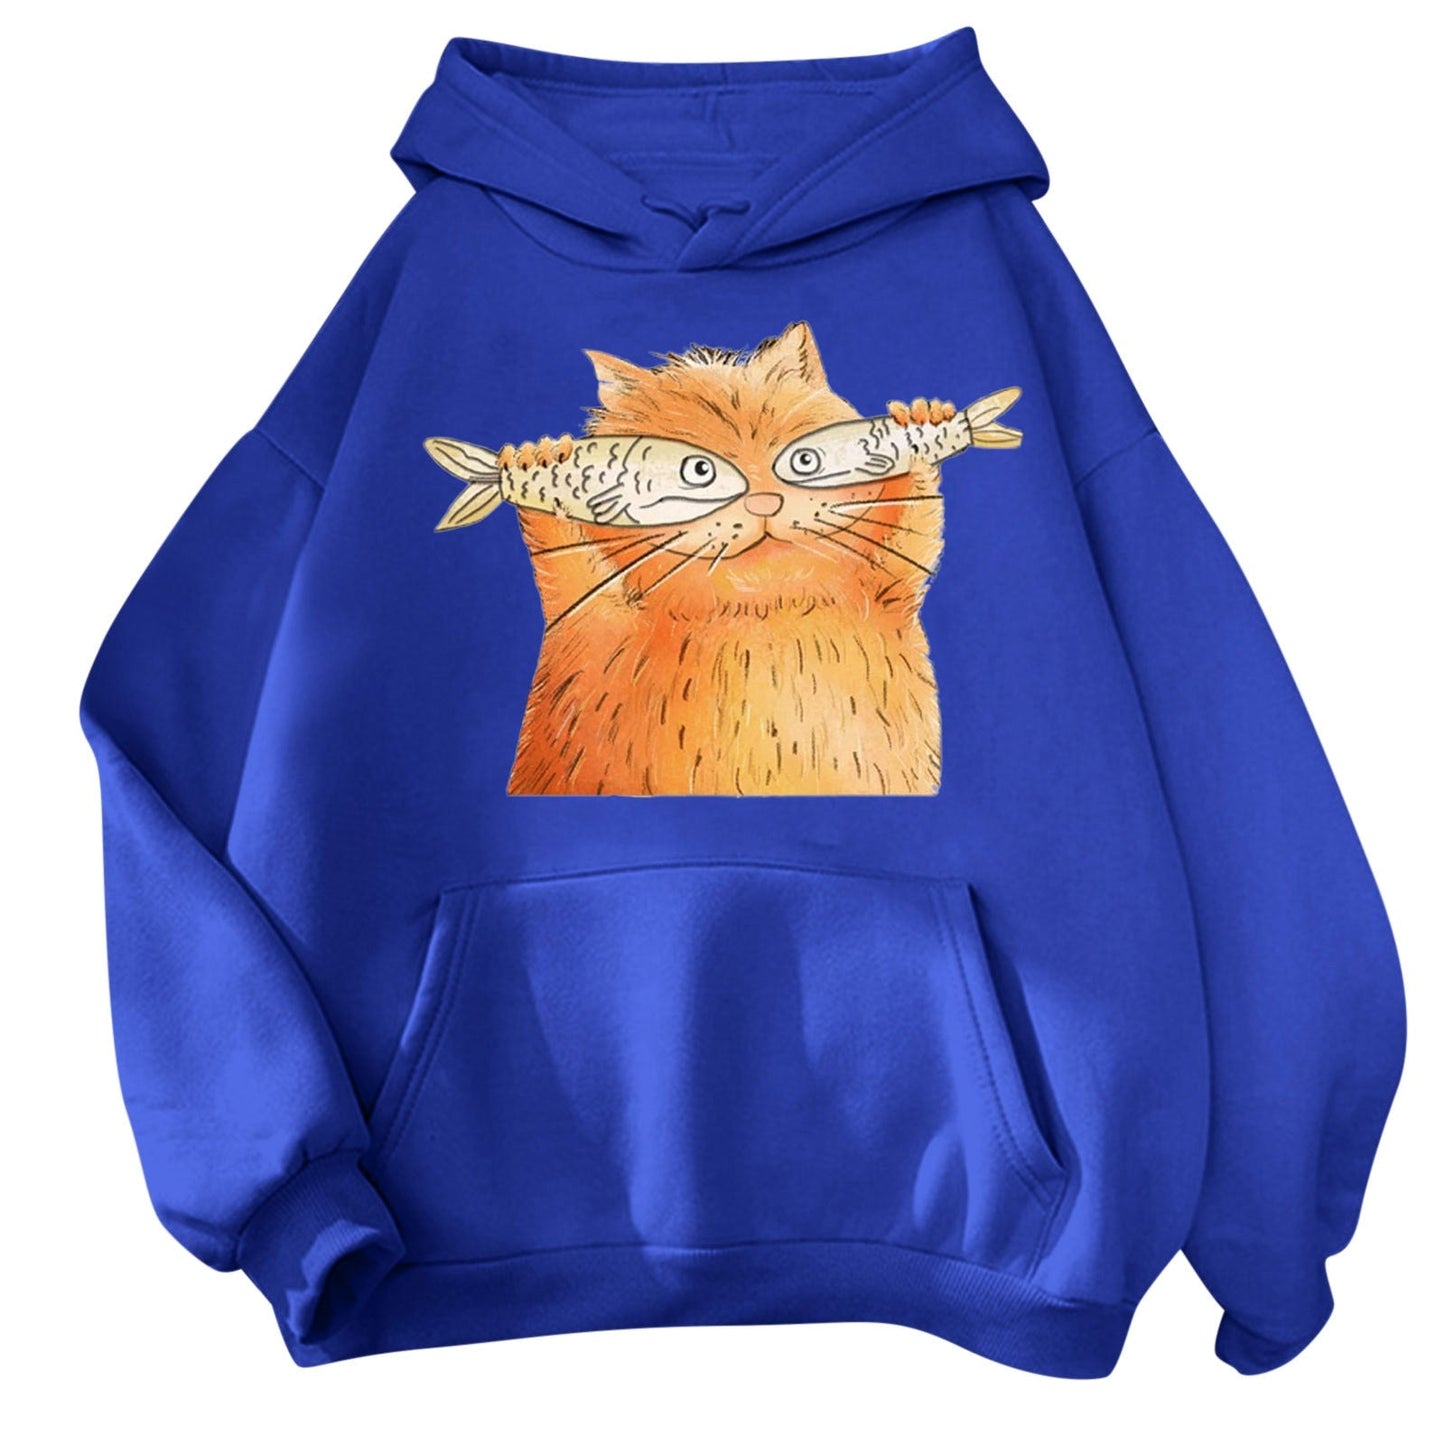 'The fishy cat' kawaii cartoon cat hoodie